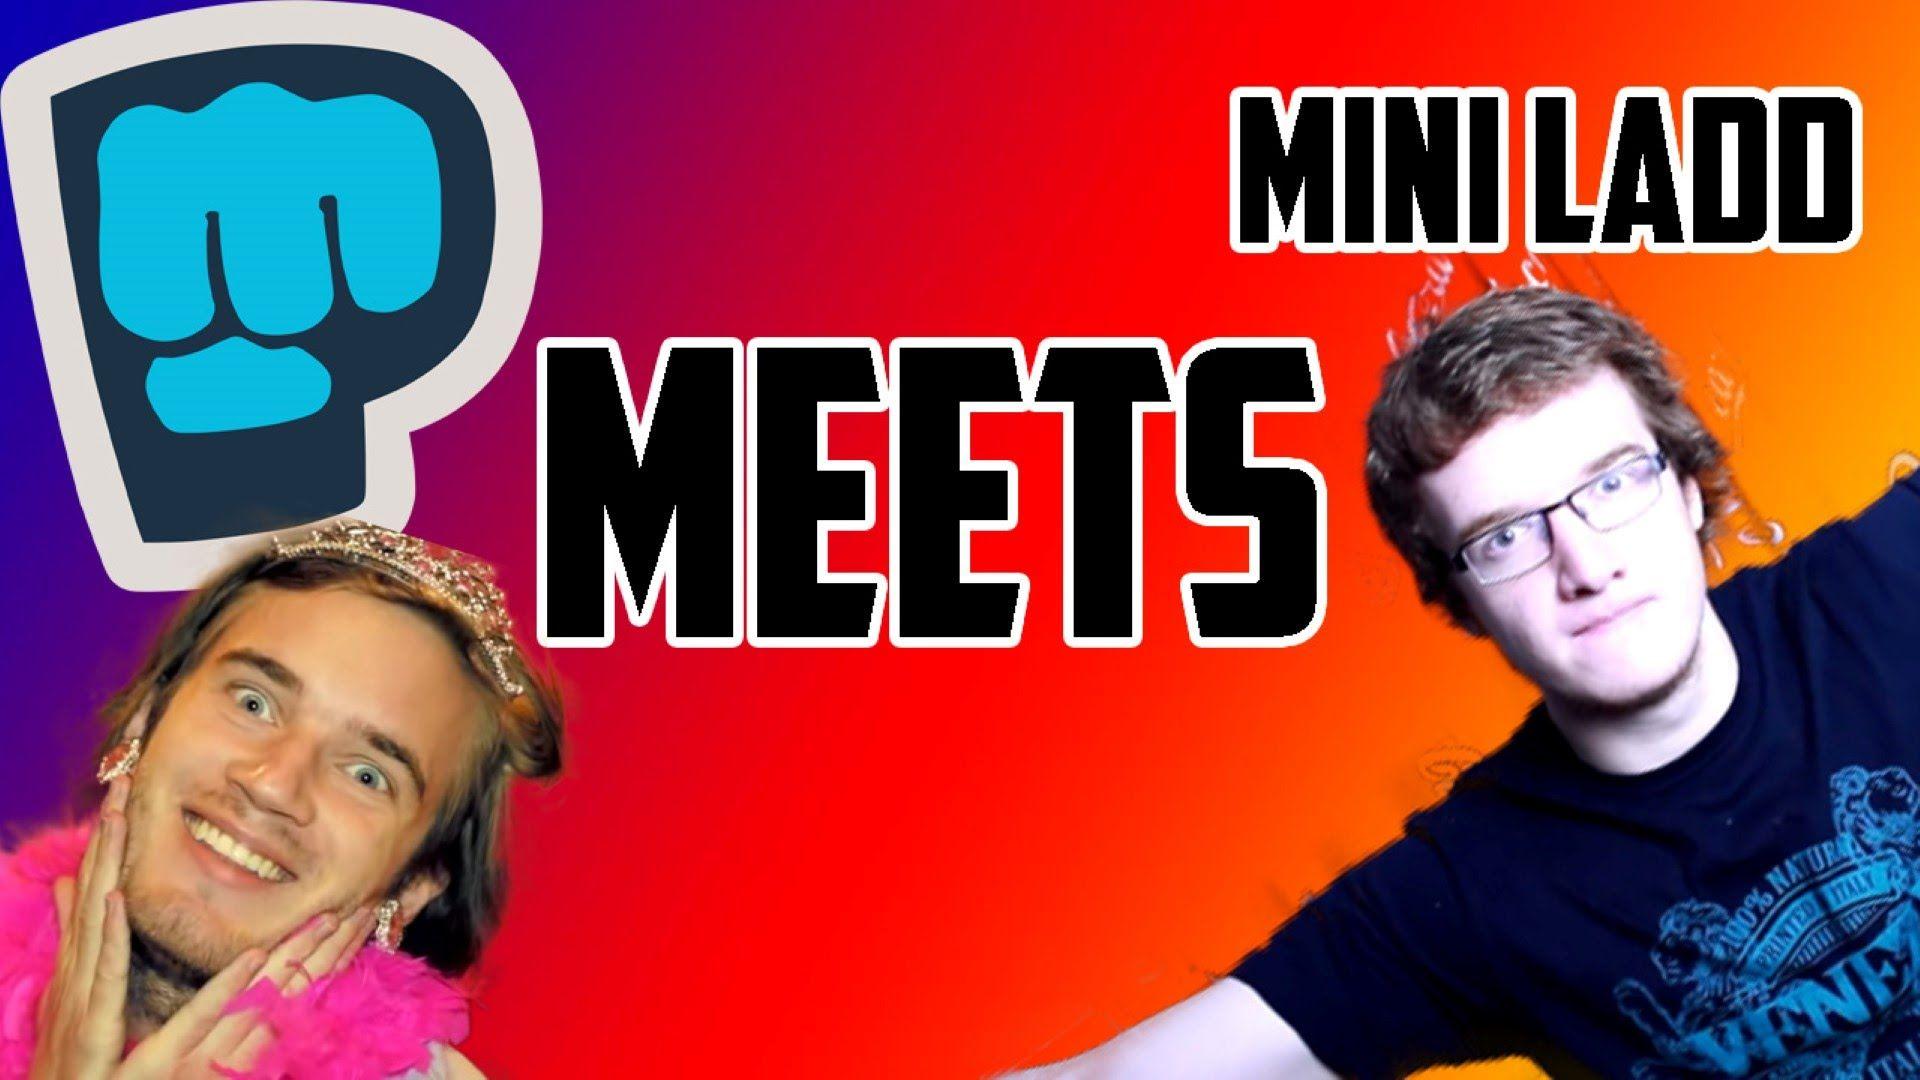 PewDiePie Meets Mini Ladd!